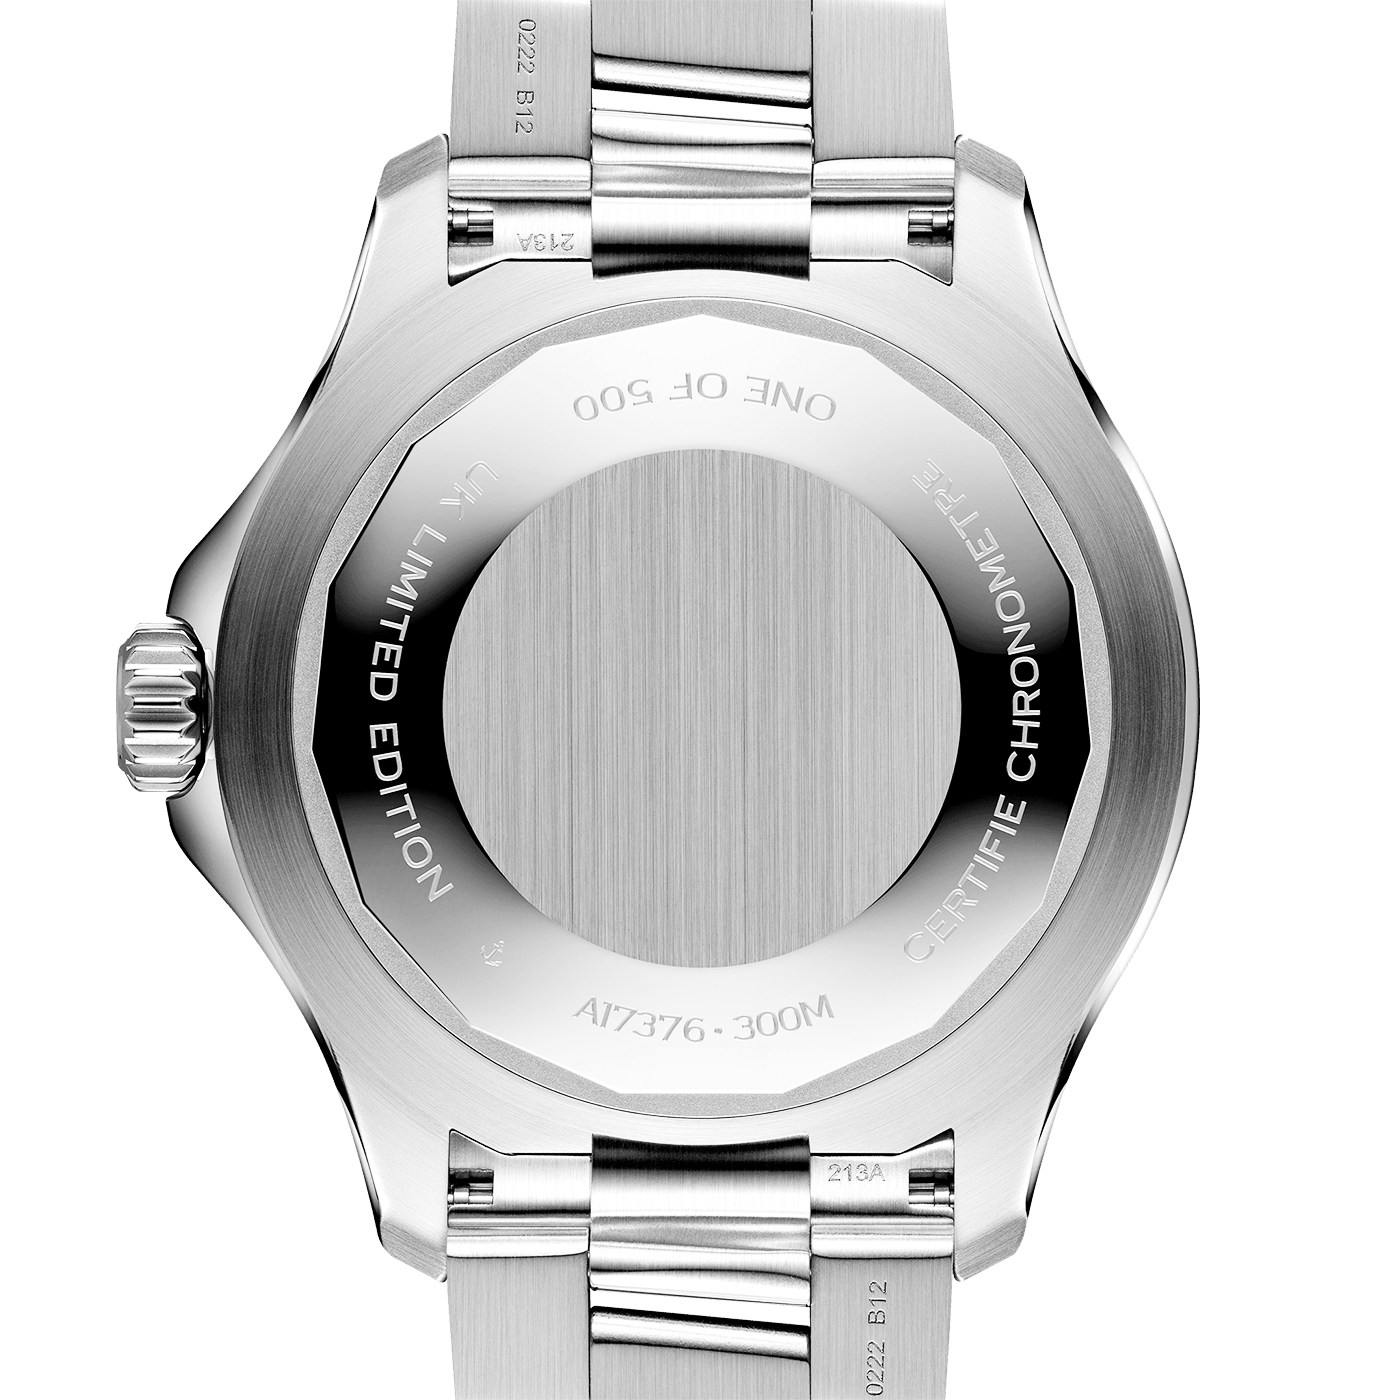 Superocean 44mm UK Limited Edition Bracelet Watch